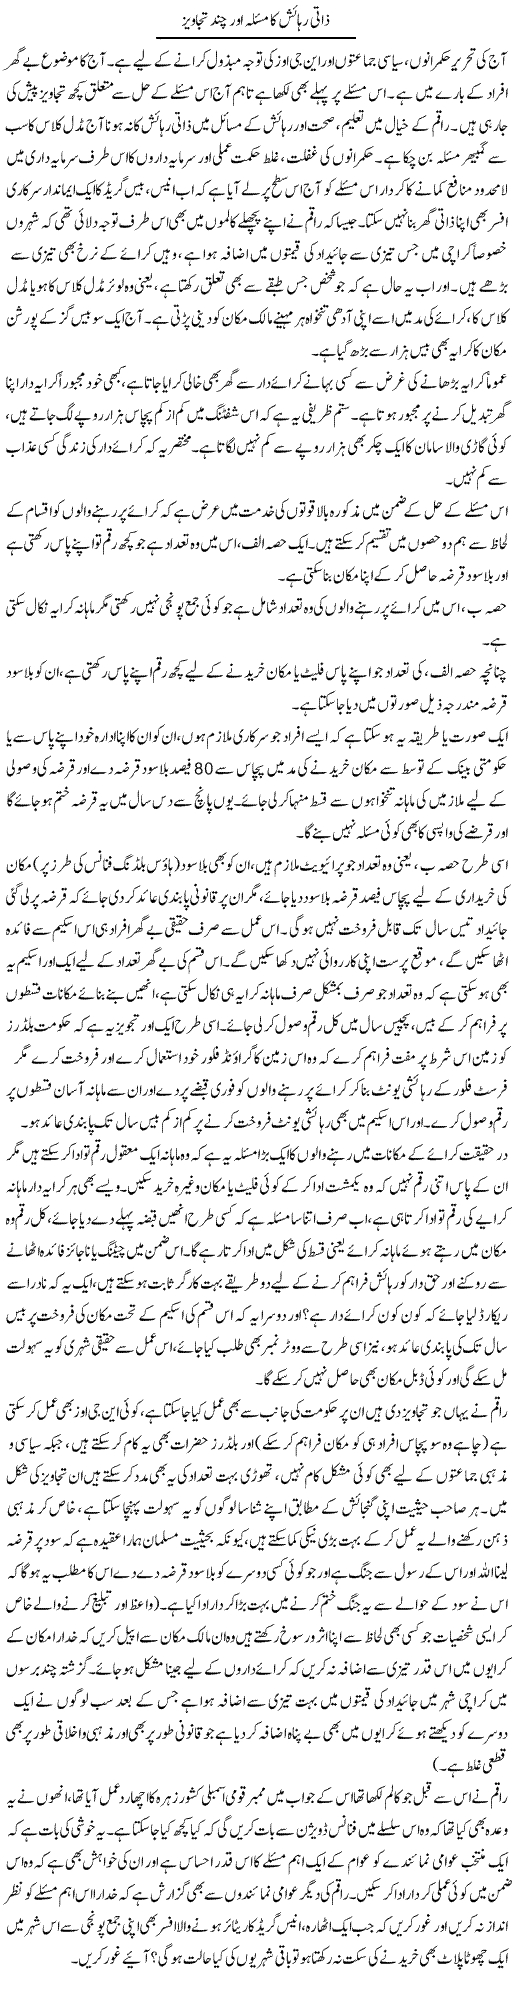 Zati Rehaish Ka Masla Aor Chand Tajaveez | Naveed Iqbal Ansari | Daily Urdu Columns